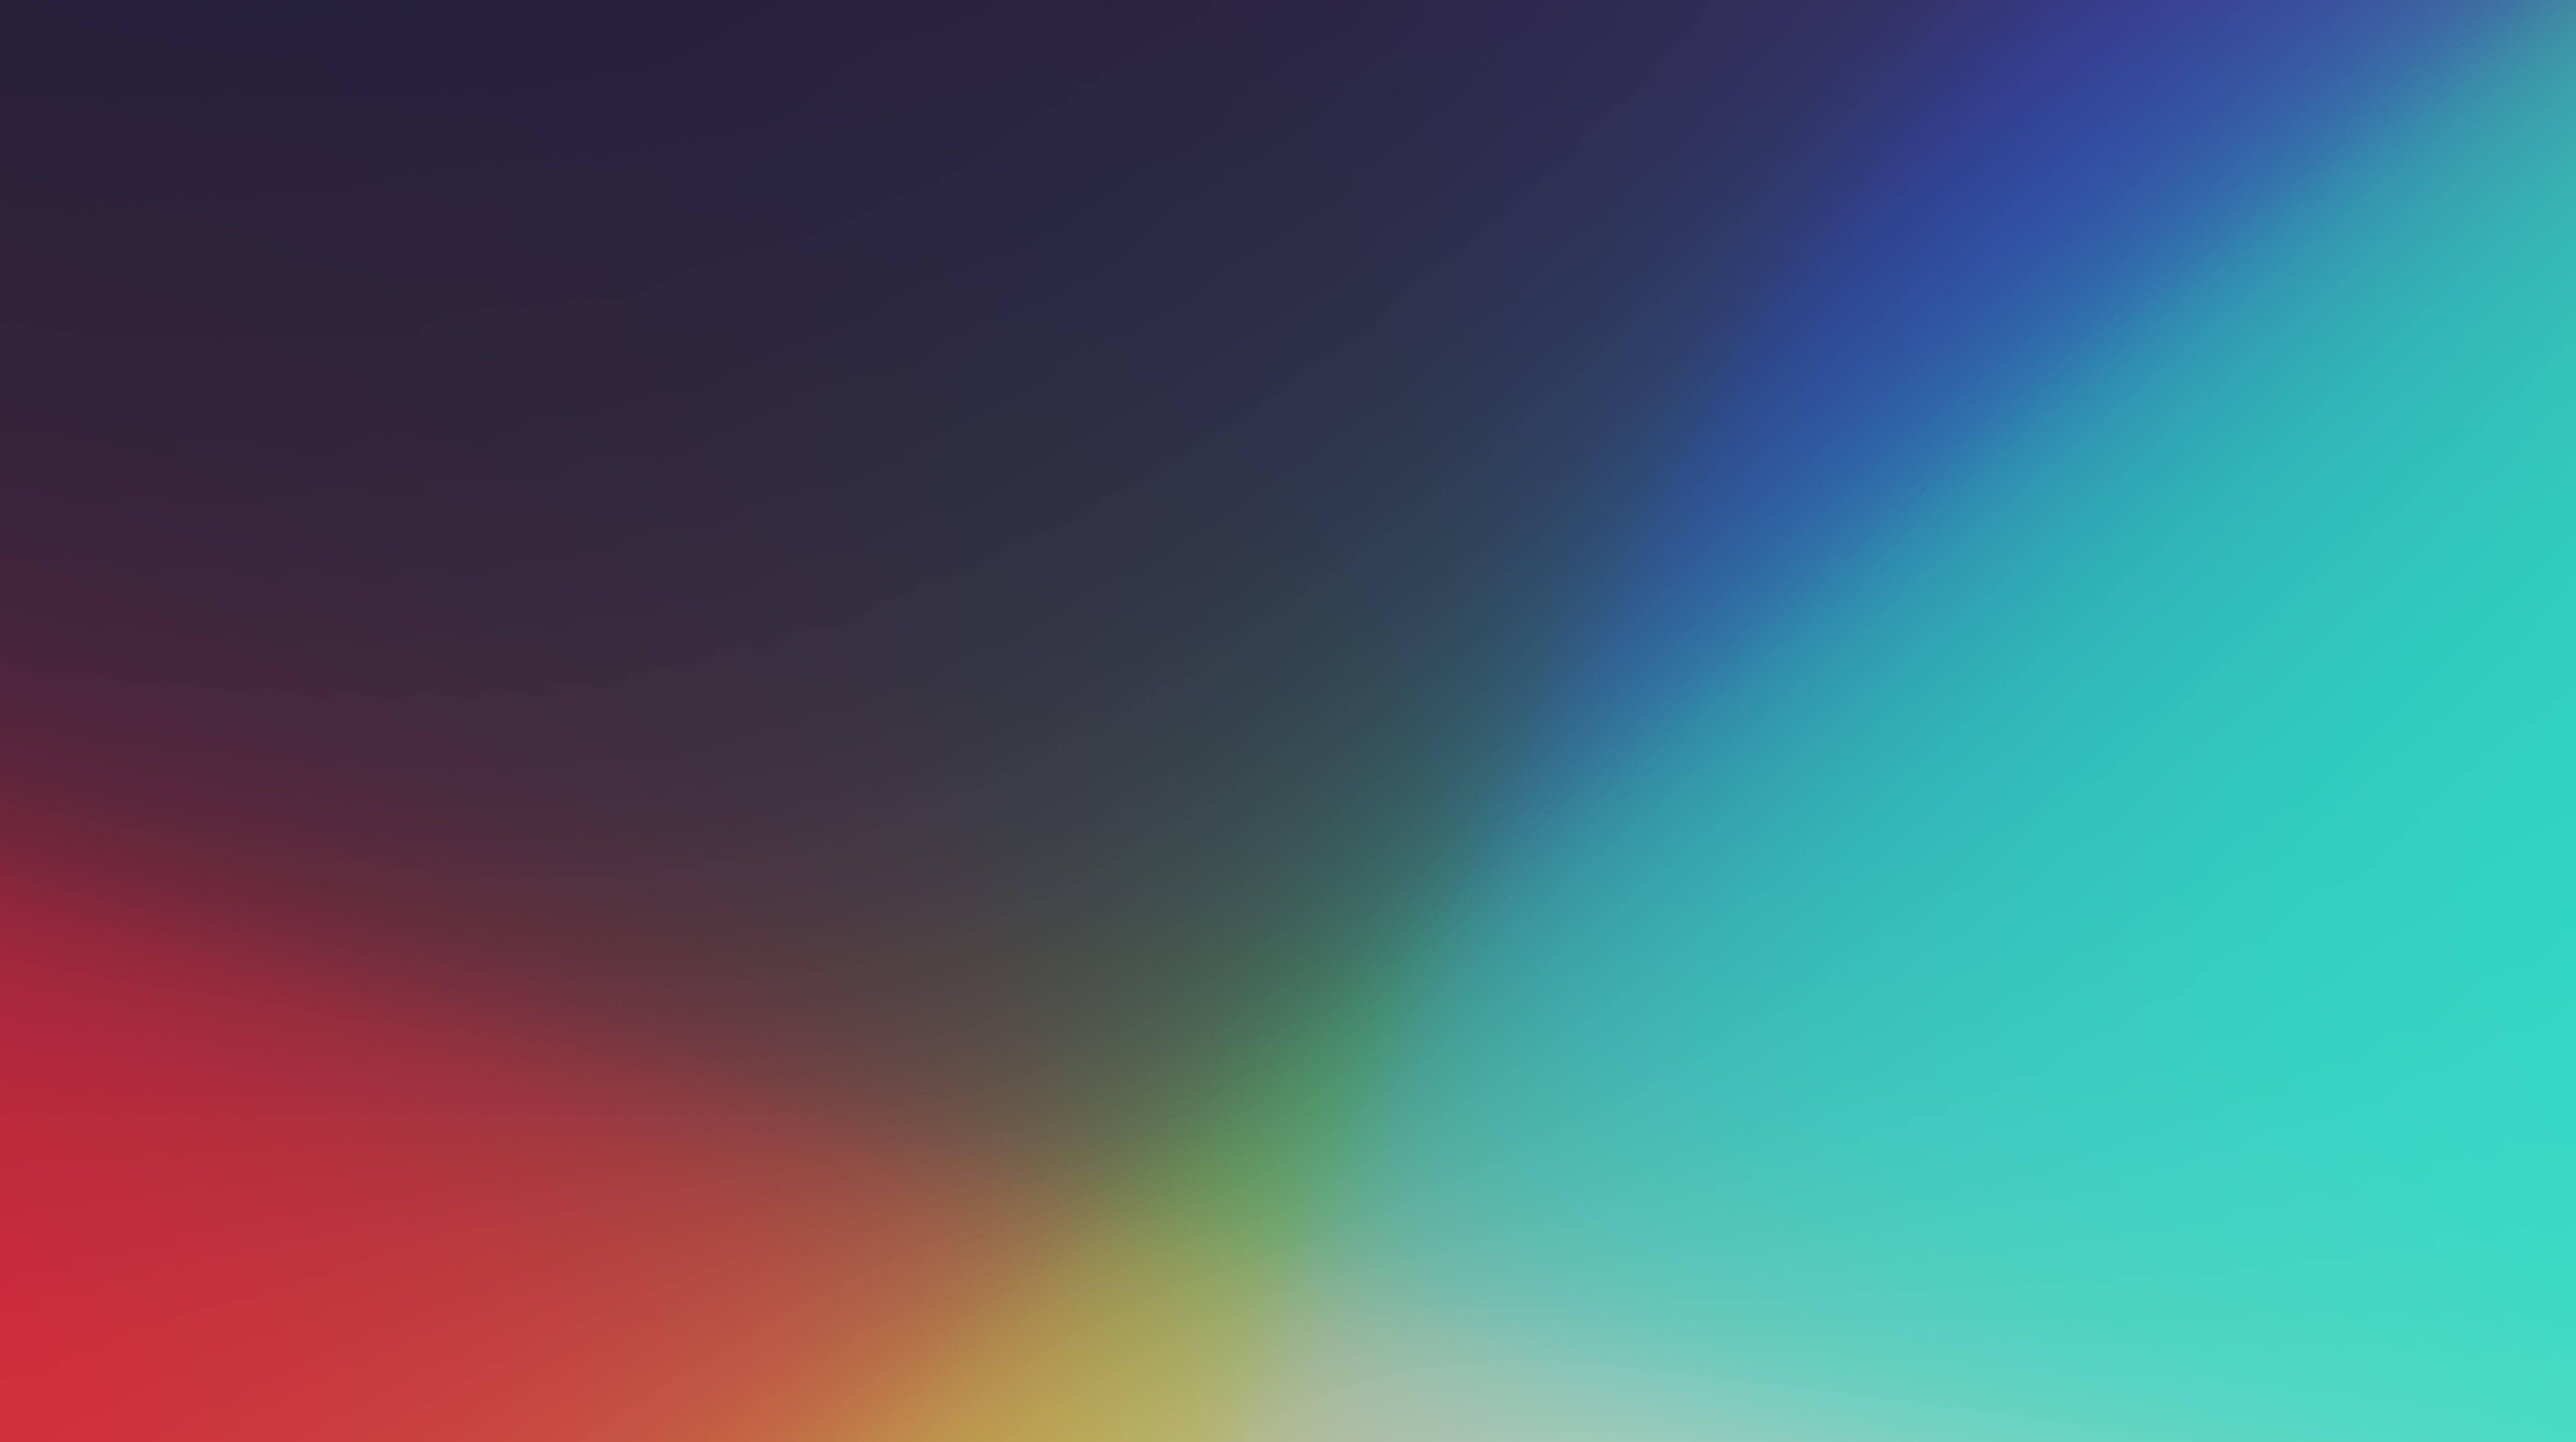 Vivid K #Colorful #Blur #Vibrant K #Gradient #Background K #wallpaper #hdwallpaper #desktop. iPhone 6 plus wallpaper, Abstract wallpaper, Ombre wallpaper